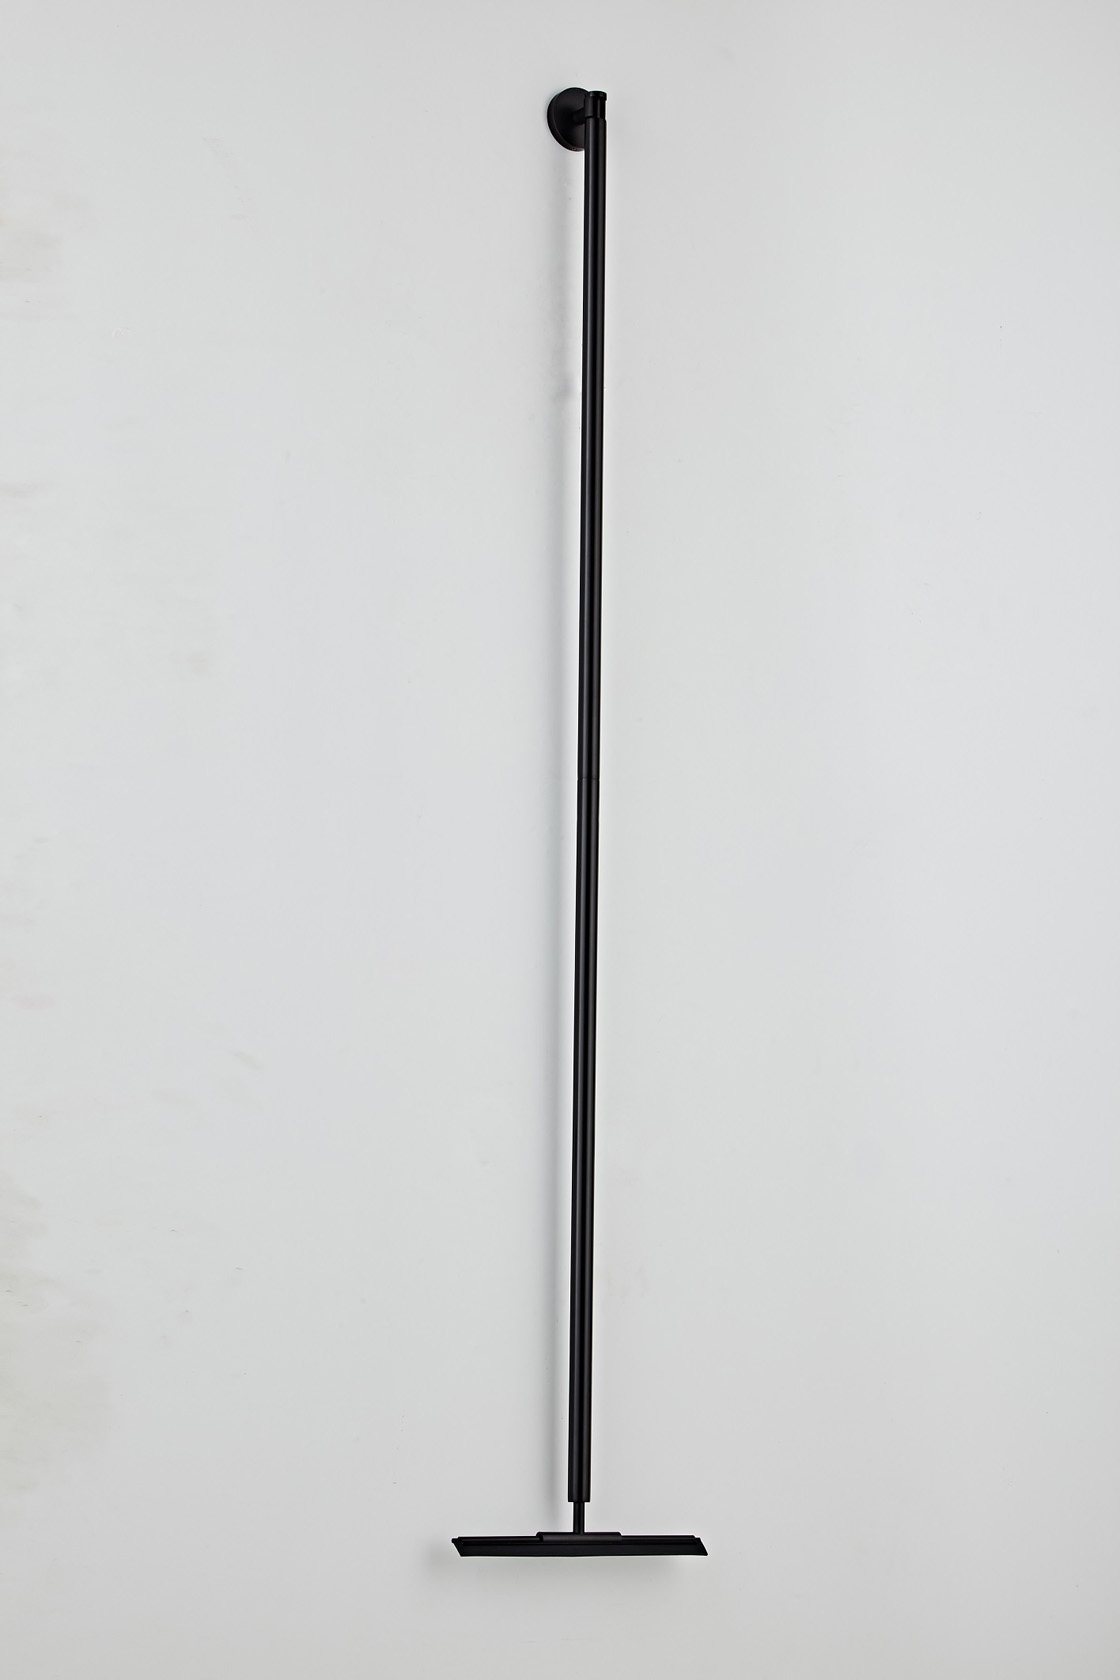 Saniclear Nero badkamer vloerwisser 125 cm mat zwart